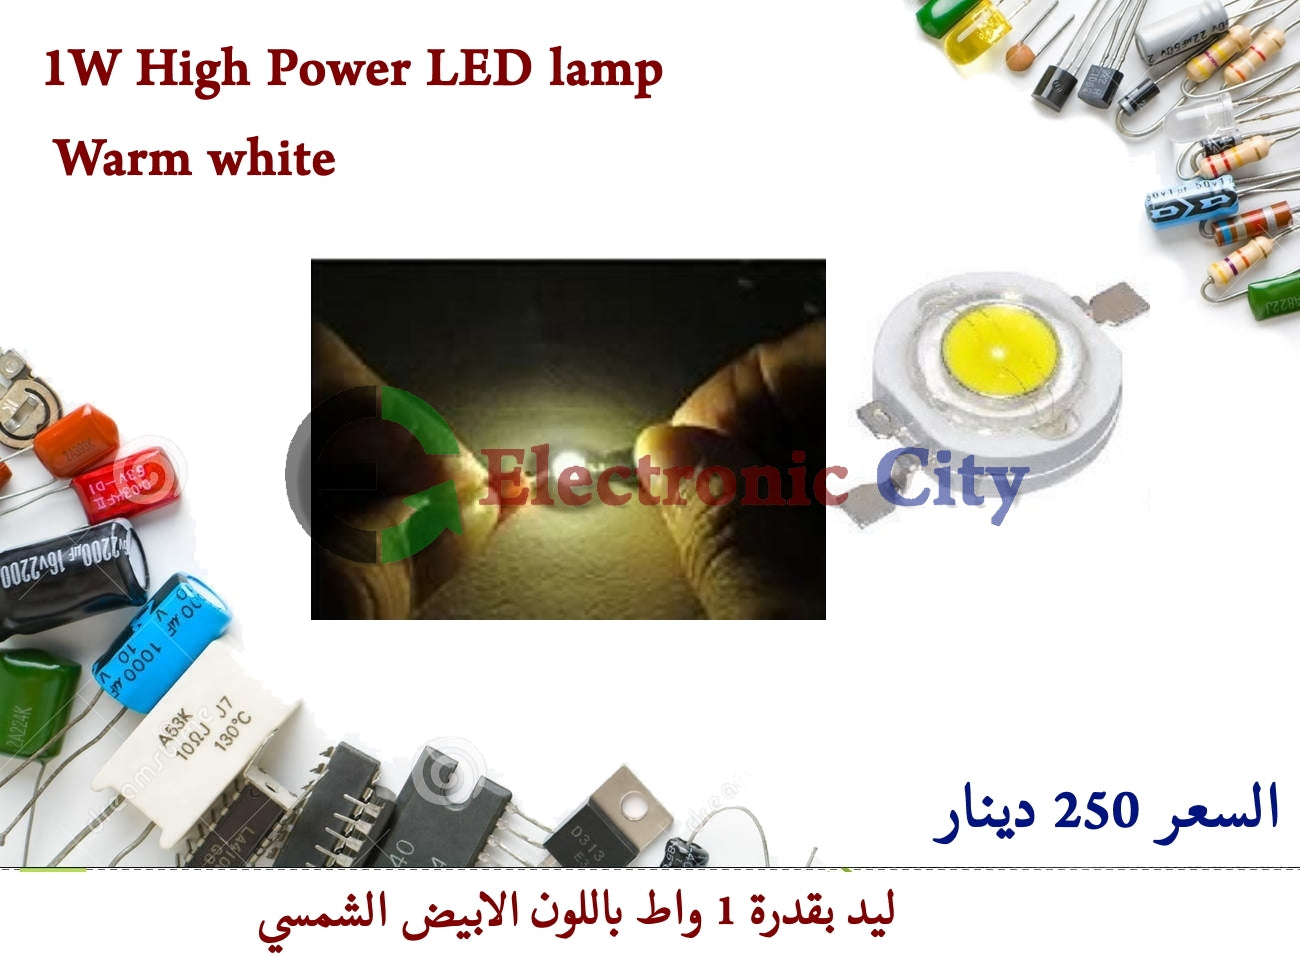 1W High Power LED lamp Warm white